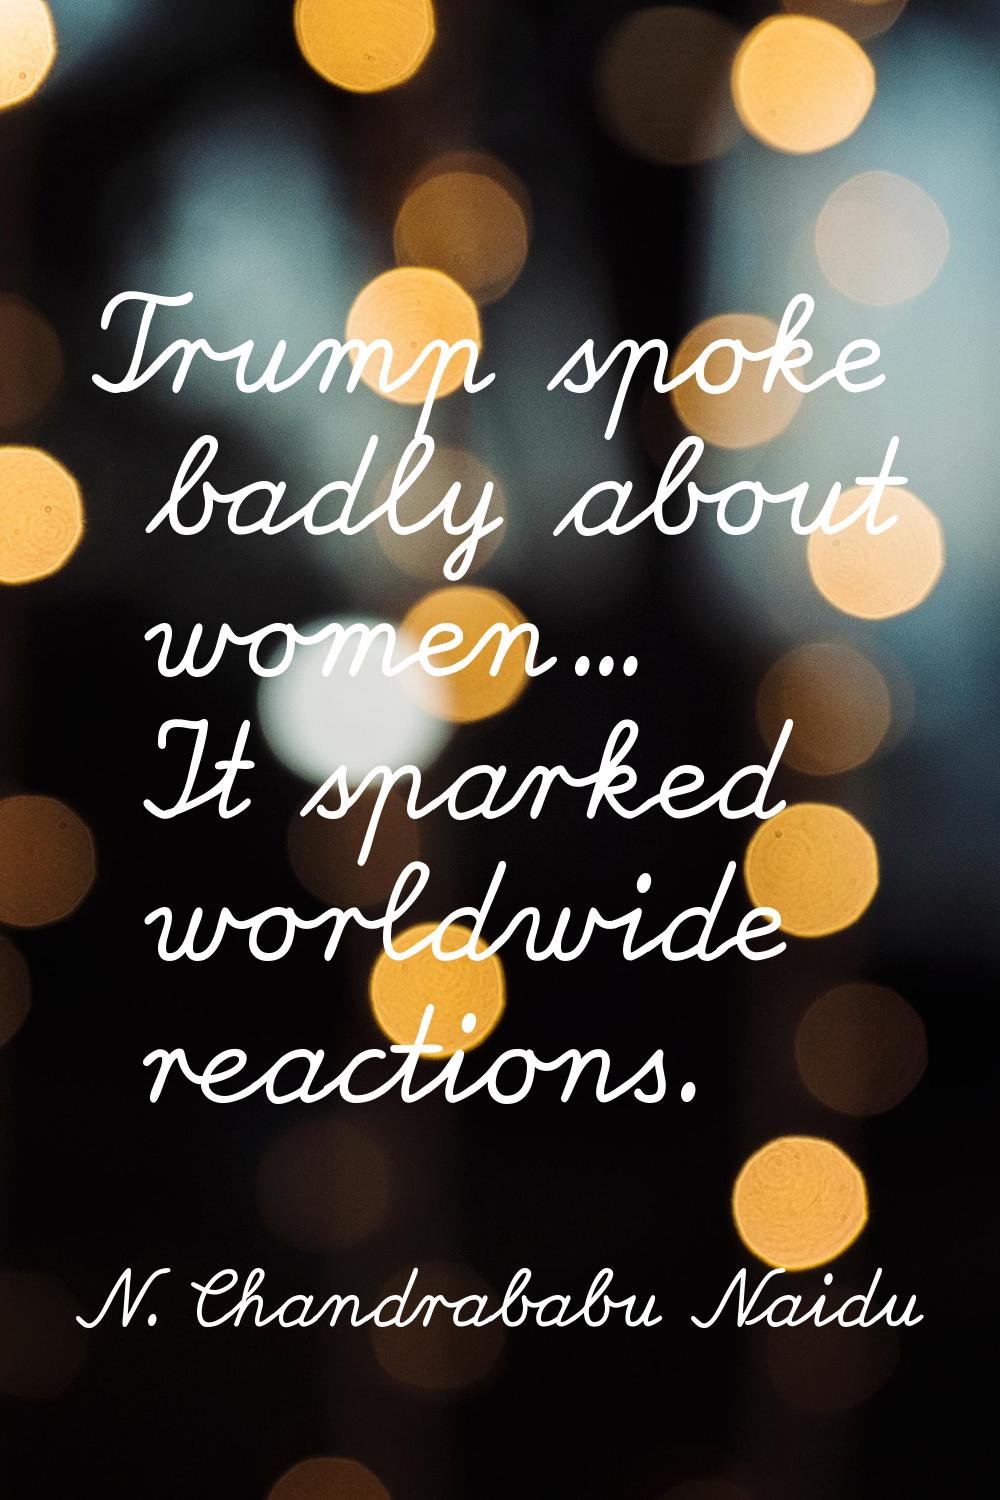 Trump spoke badly about women... It sparked worldwide reactions.